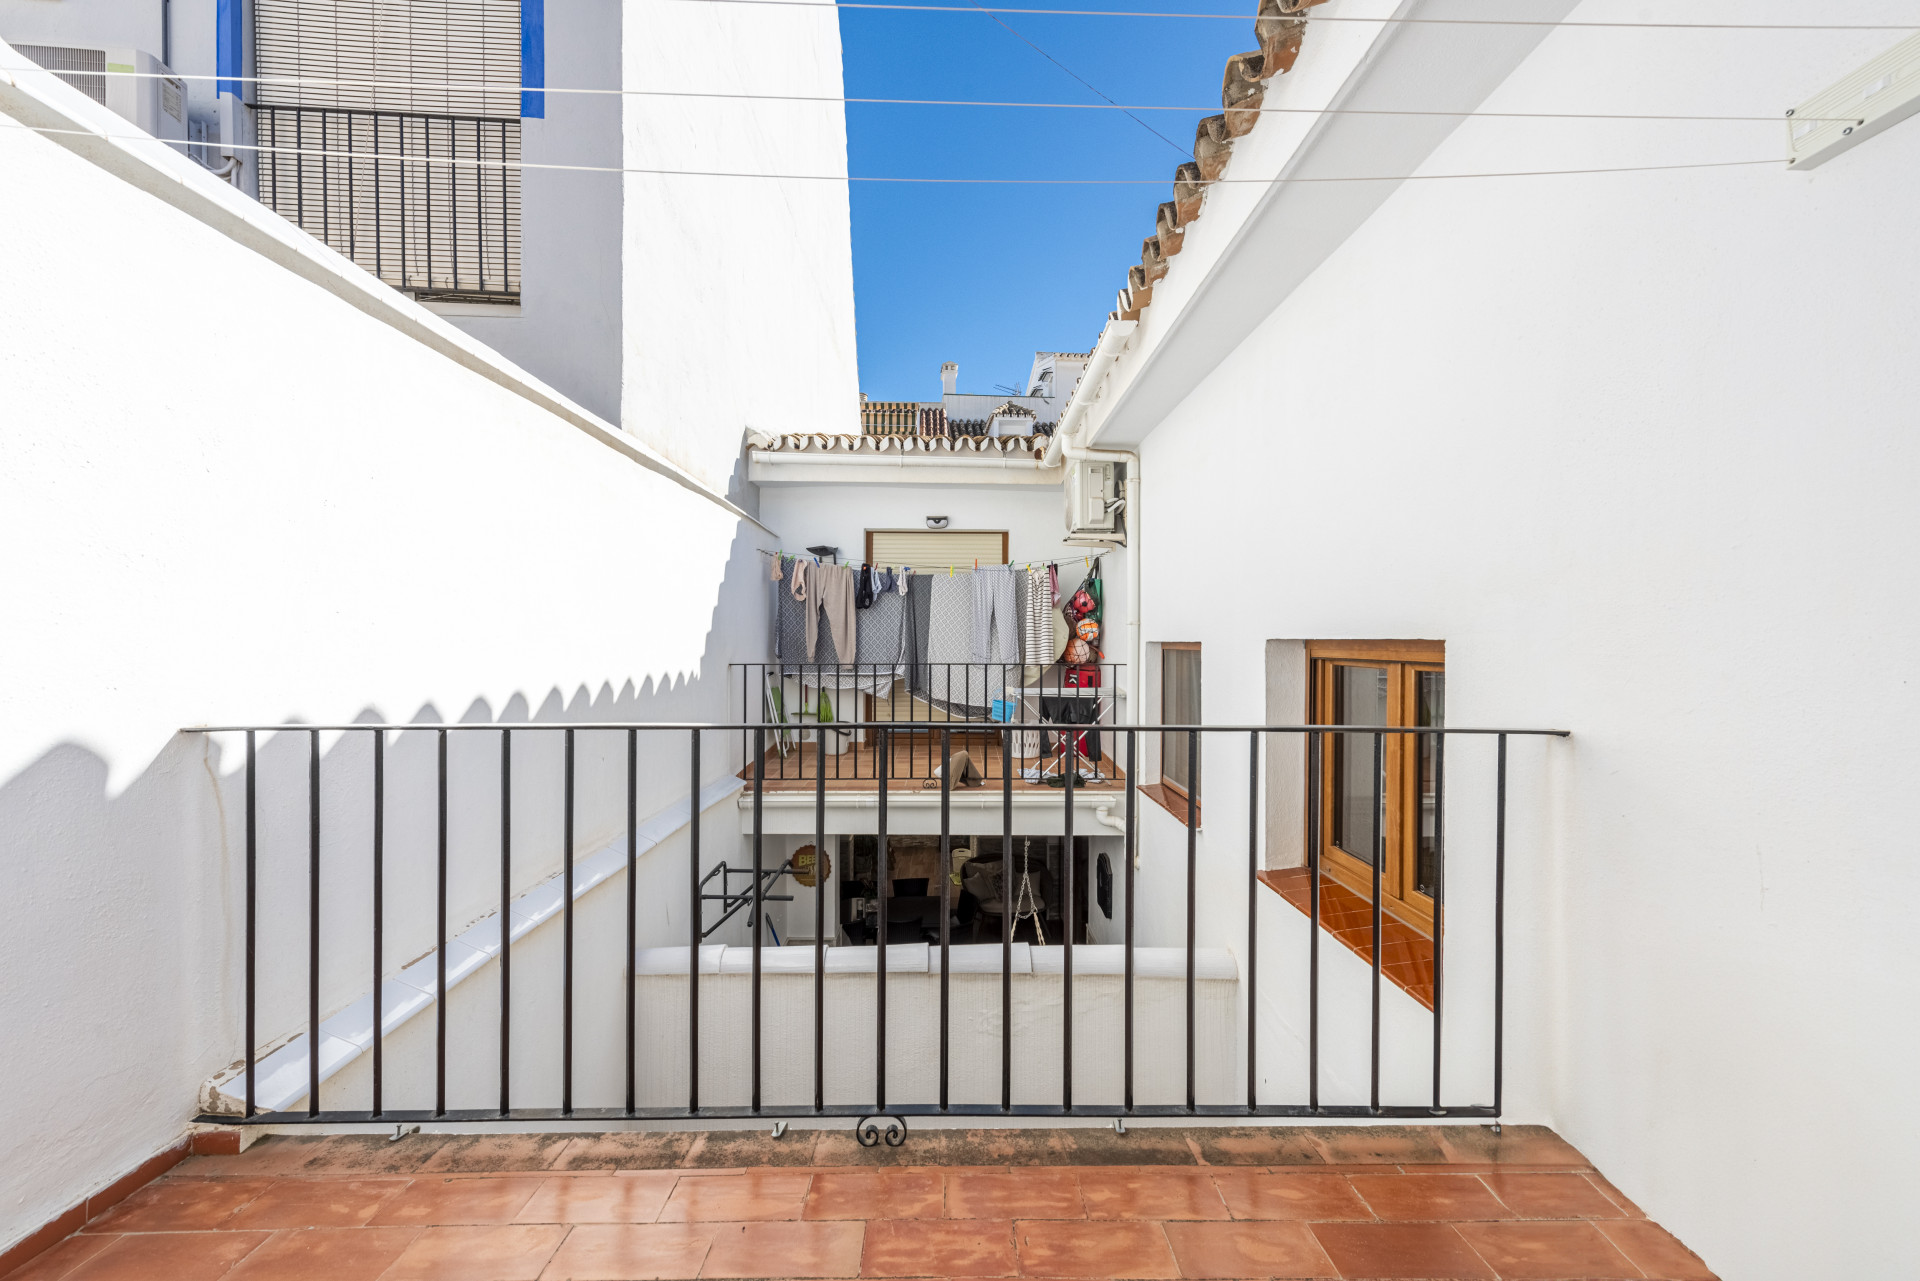 New property in the very heart of Fuengirola - Patio de Los Naranjos.